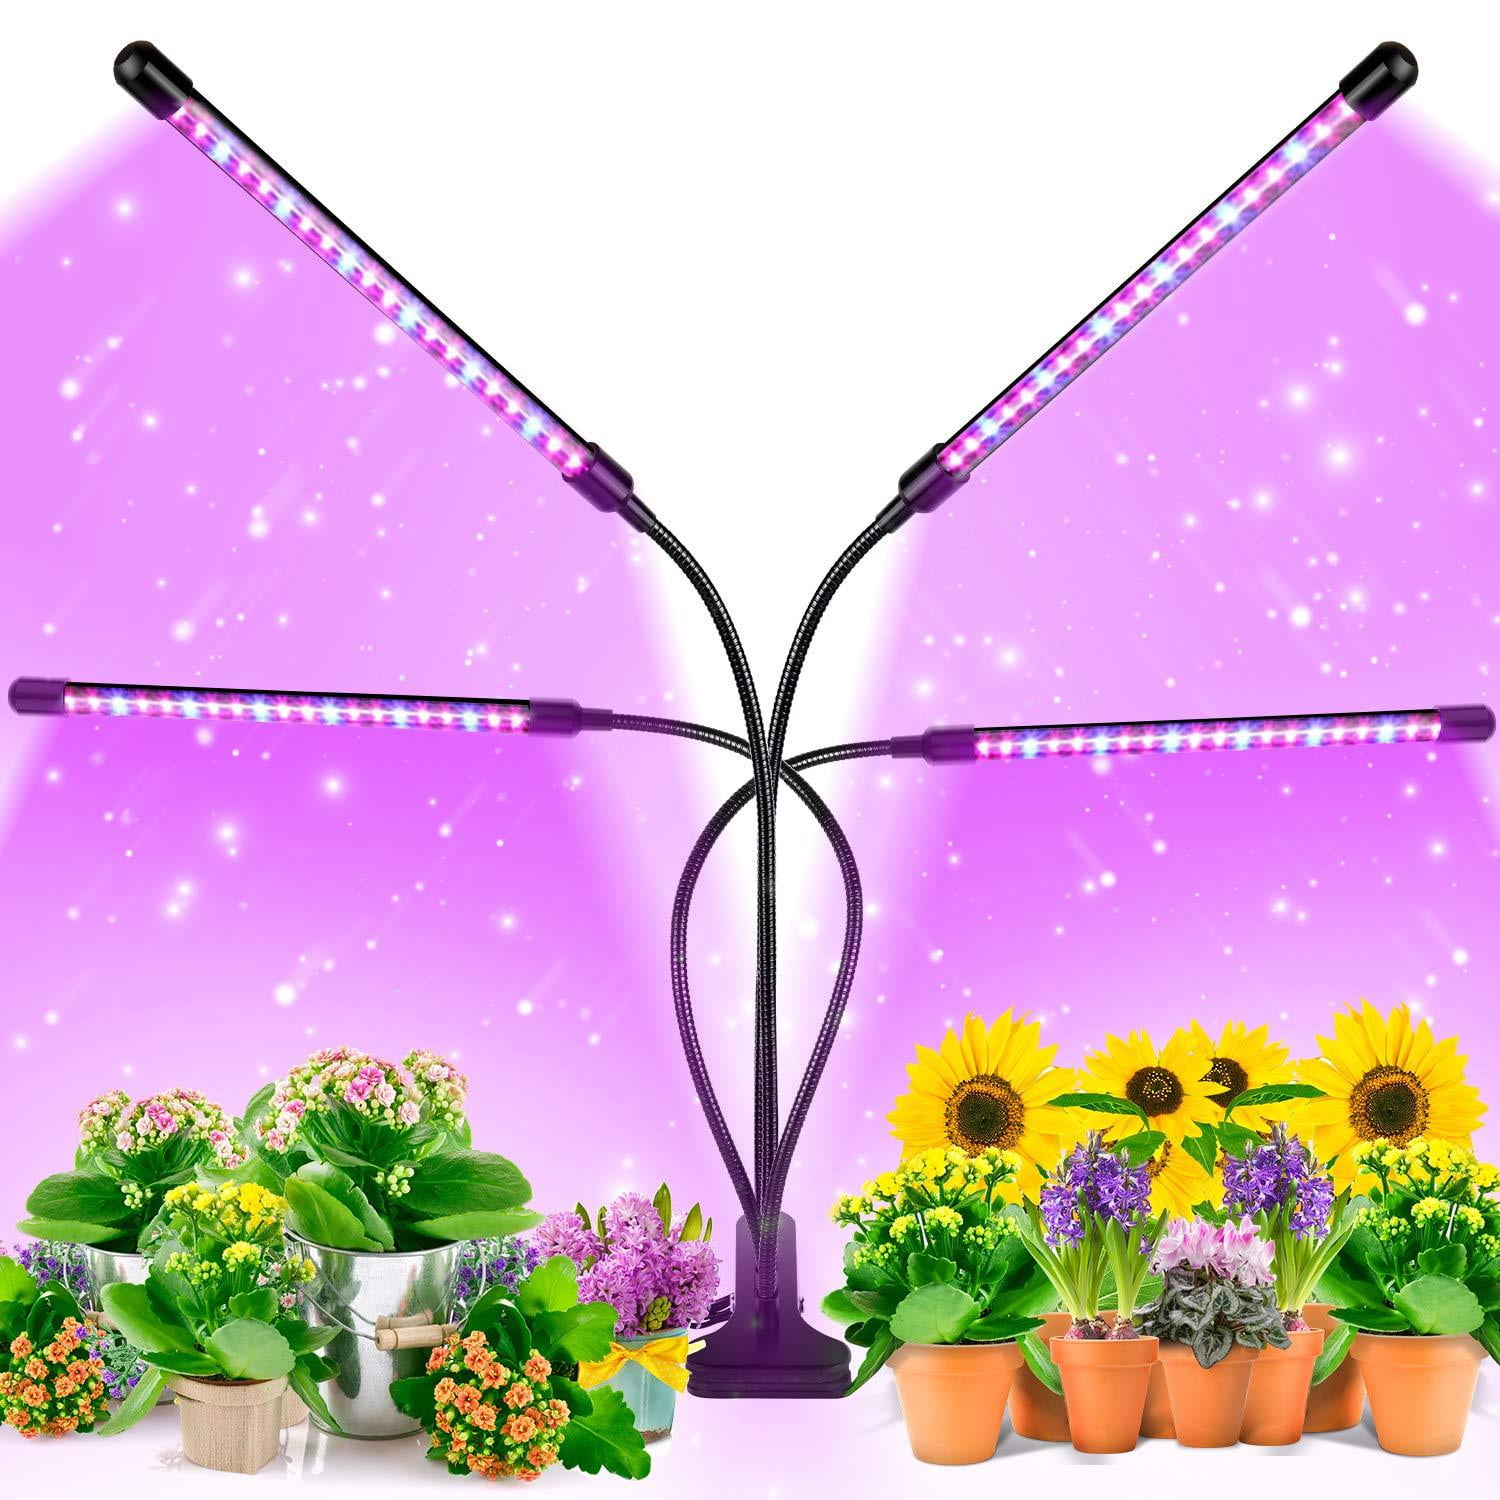 80W 4 Foot Panel LED Grow Light System Full Spectrum Indoor Plant Hydroponics 